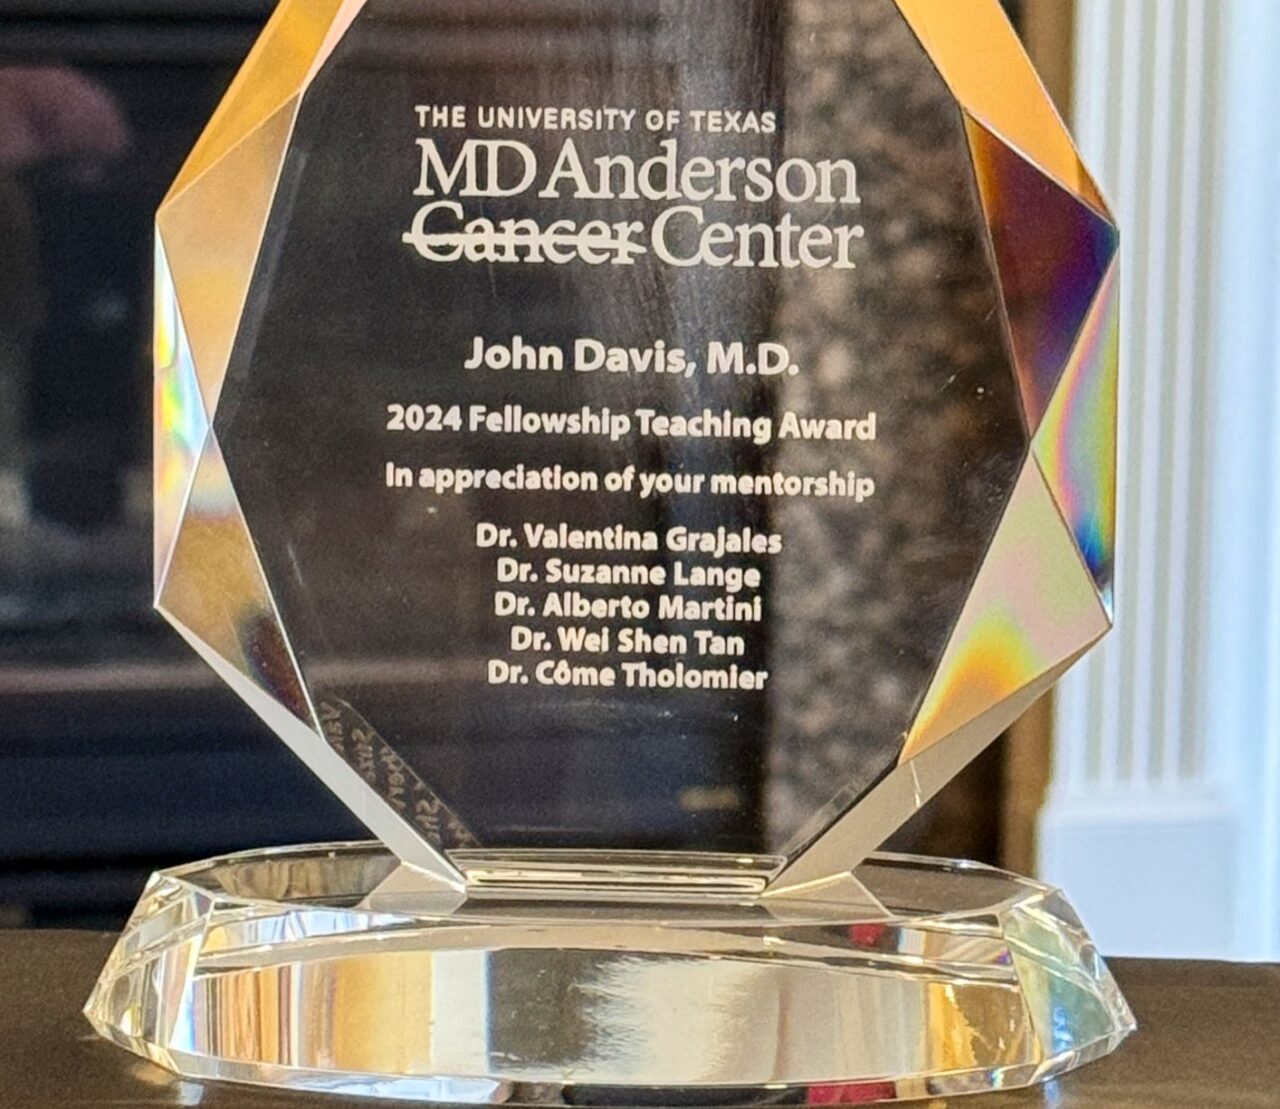 John W. Davis: A special graduation for Anderson Cancer Center urology trainee’s